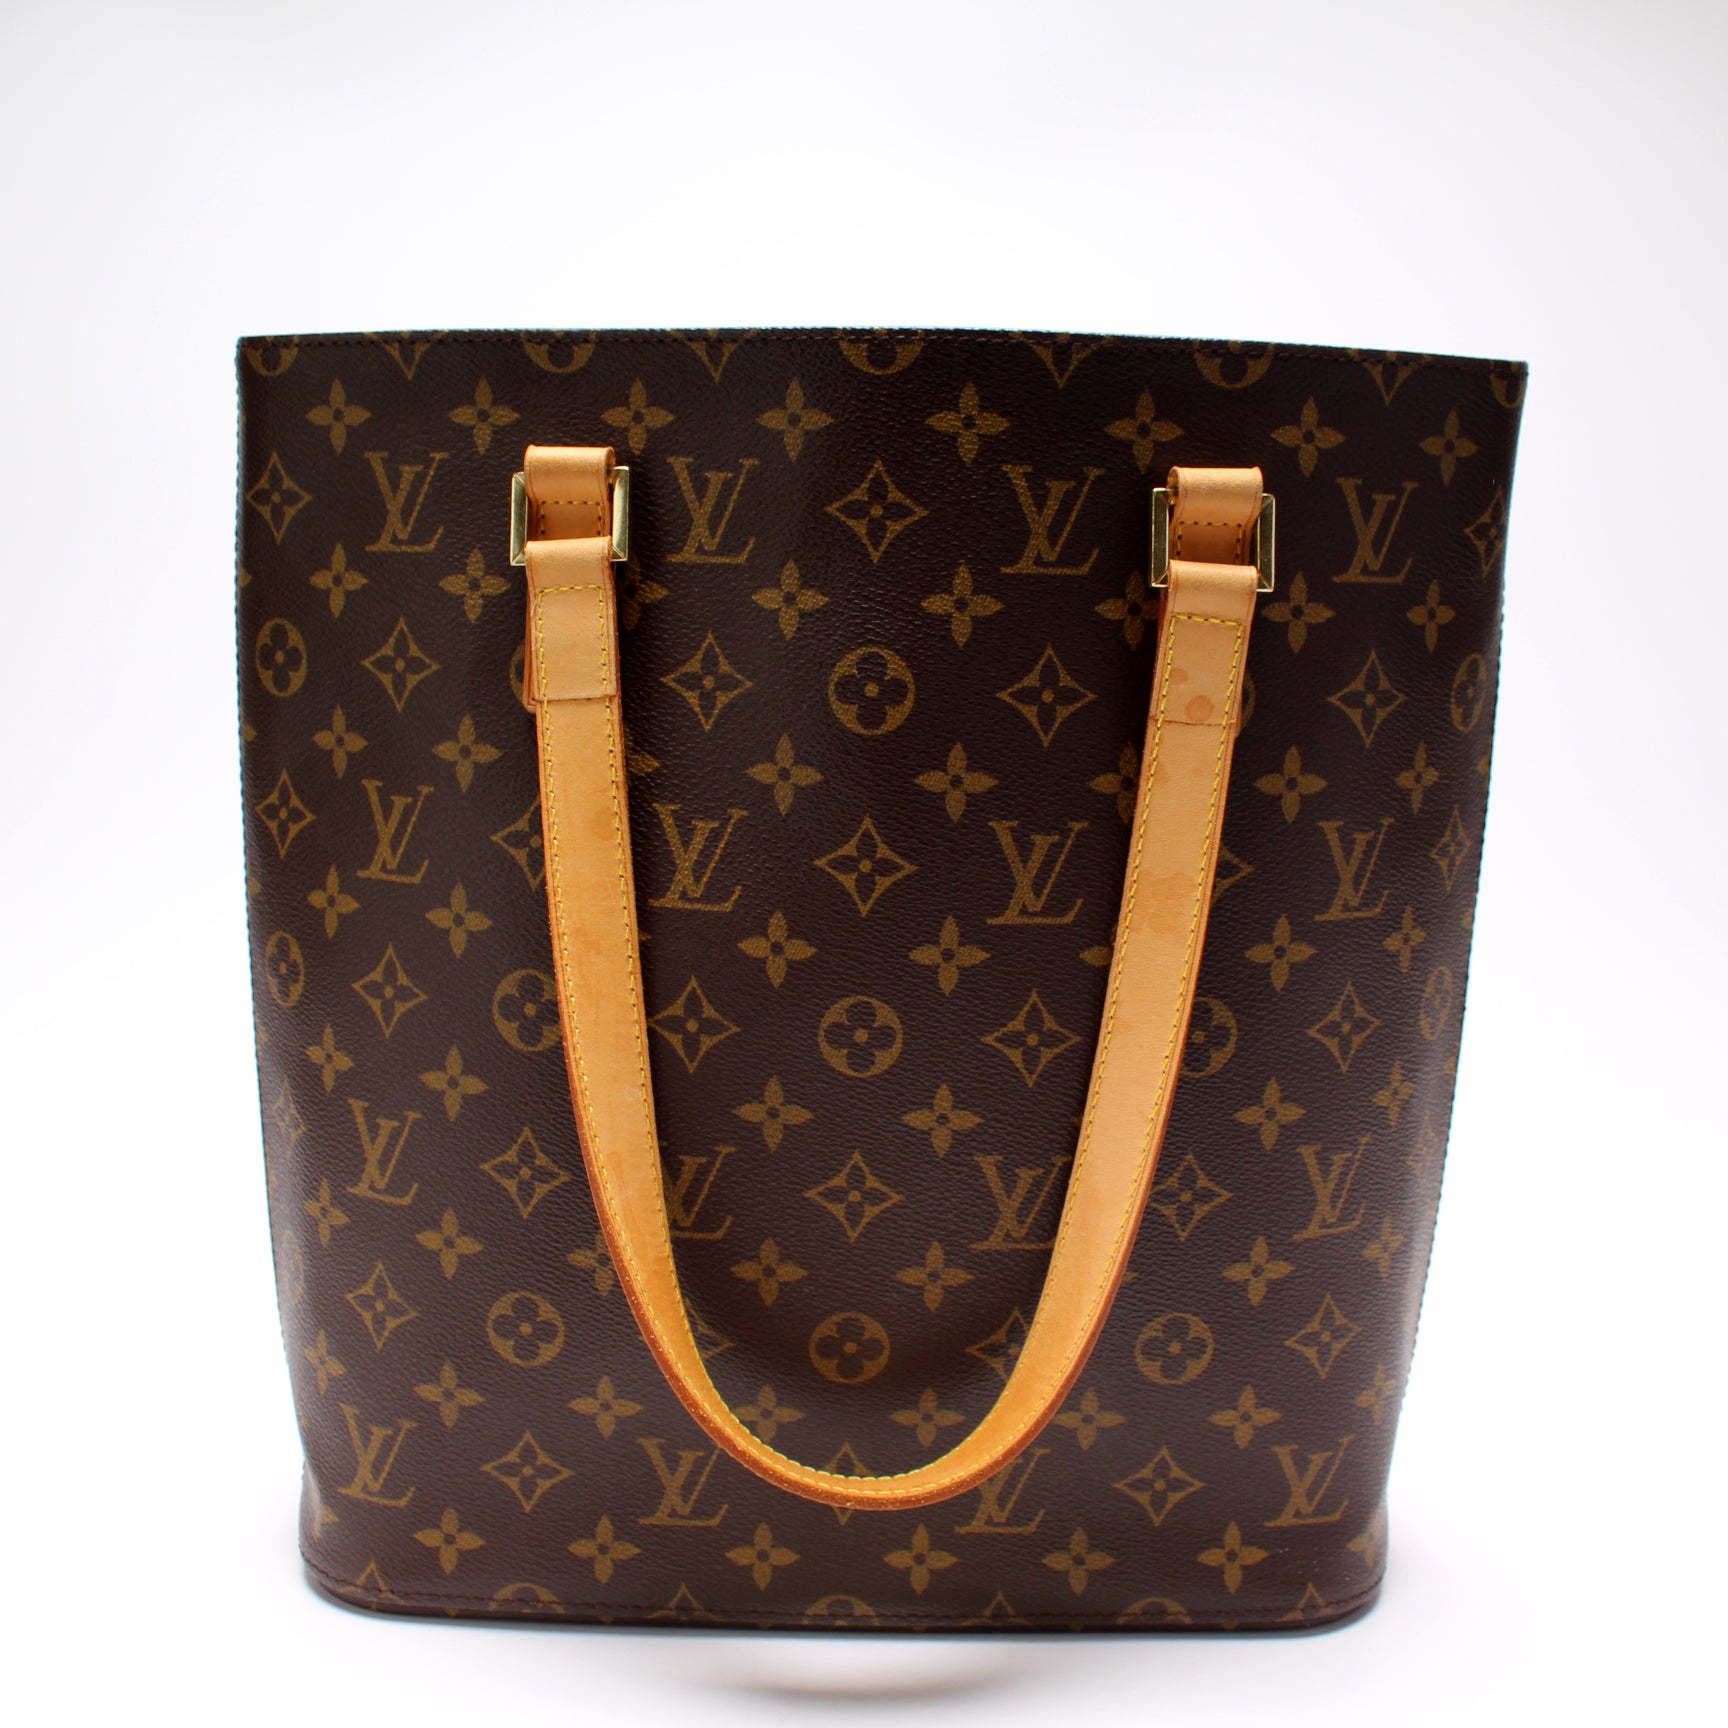 Louis Vuitton Vavin GM Bag in Excellent Condition - Handbags